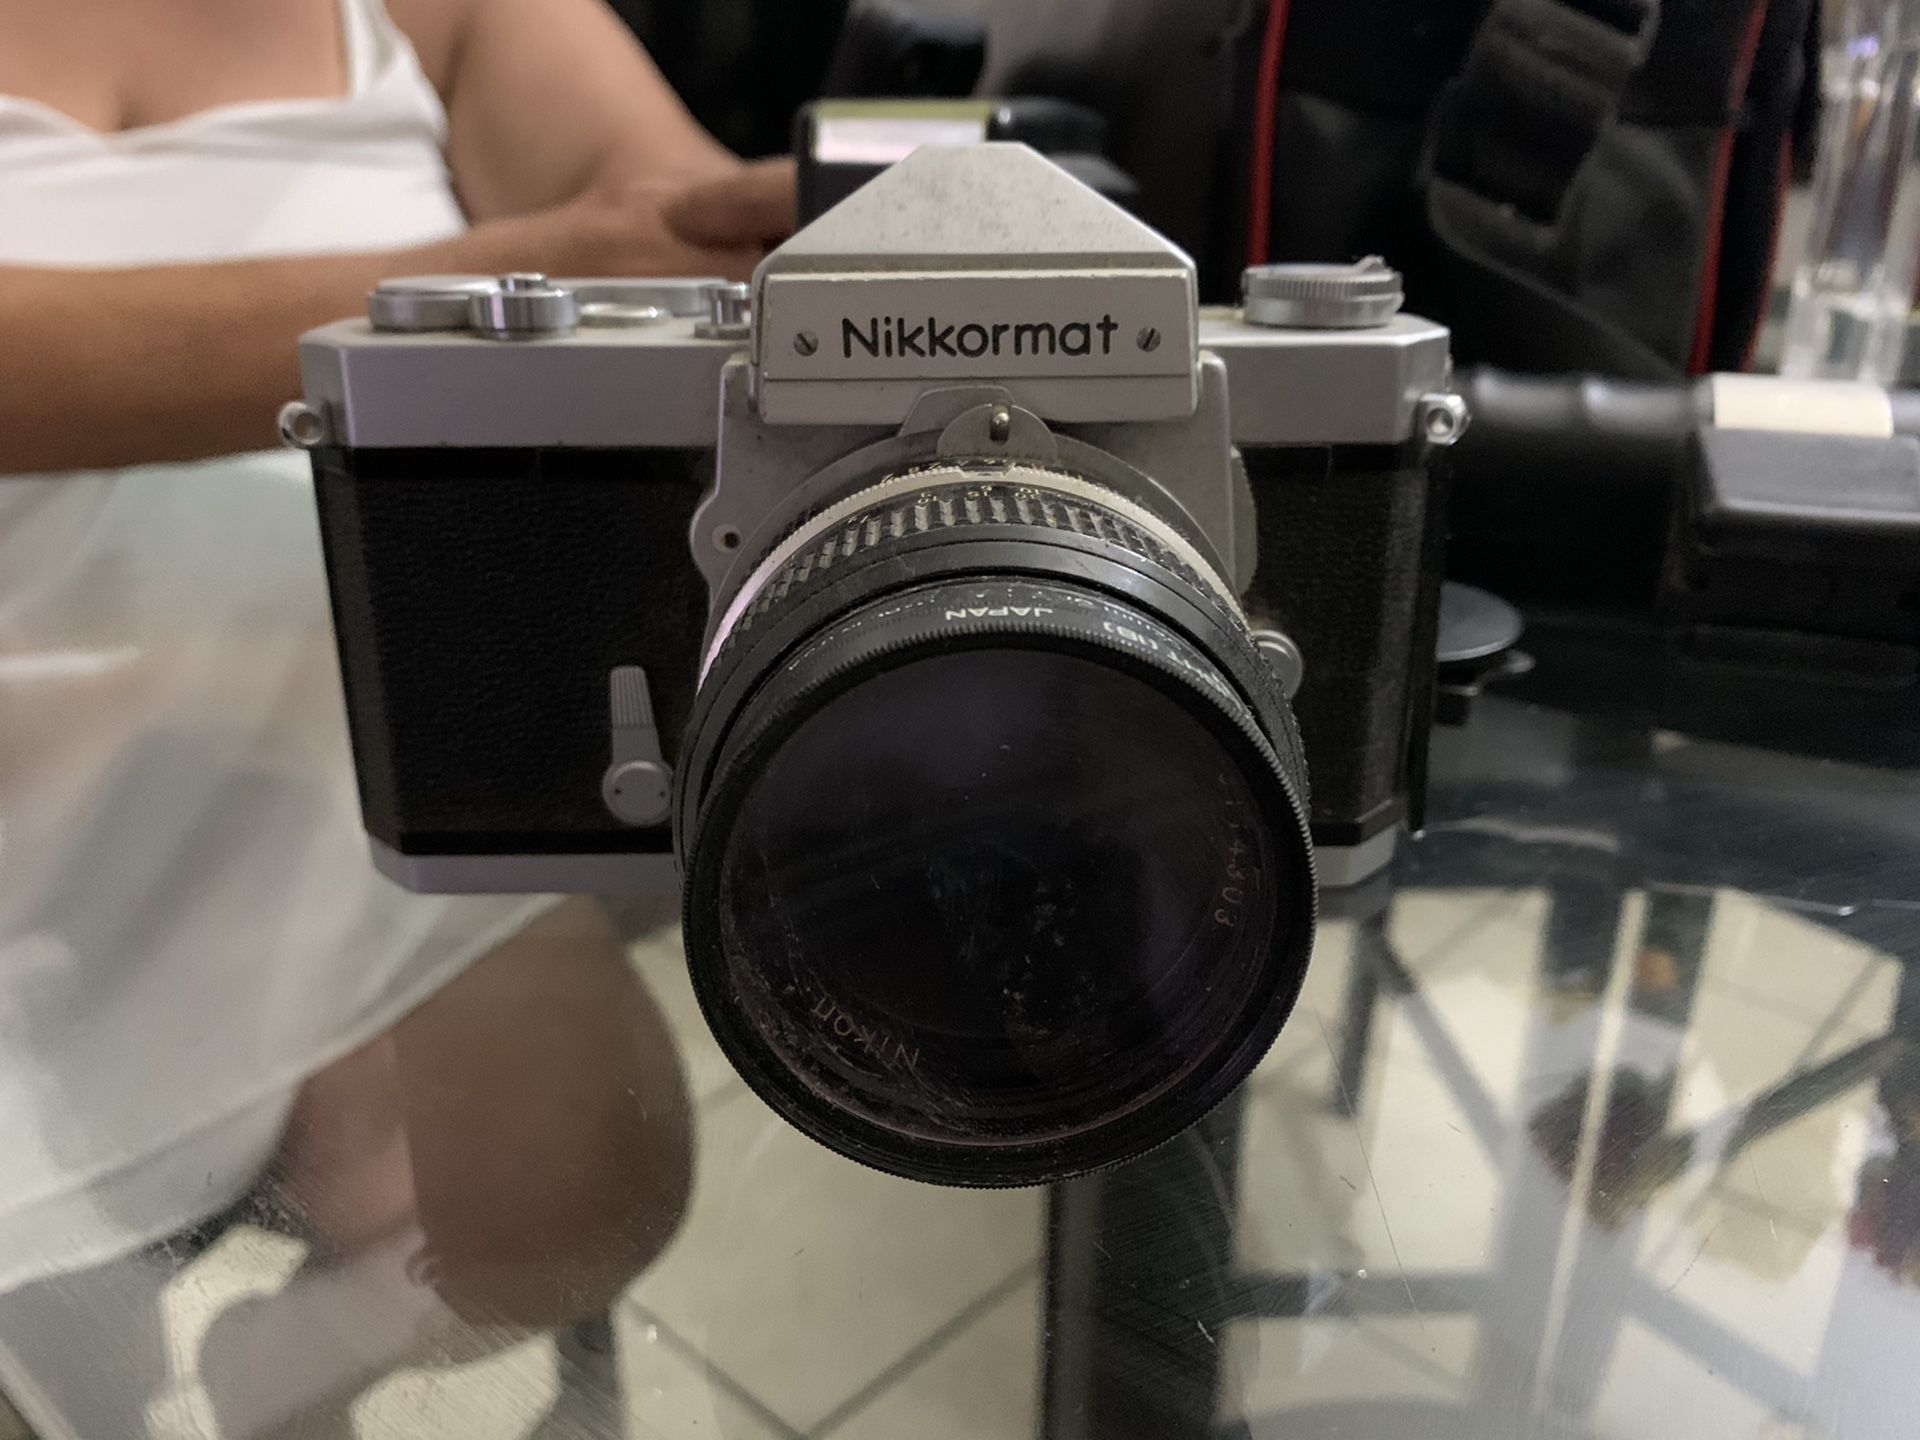 Classic Nikon Nikkormat w/52mm attachment lens and equipment